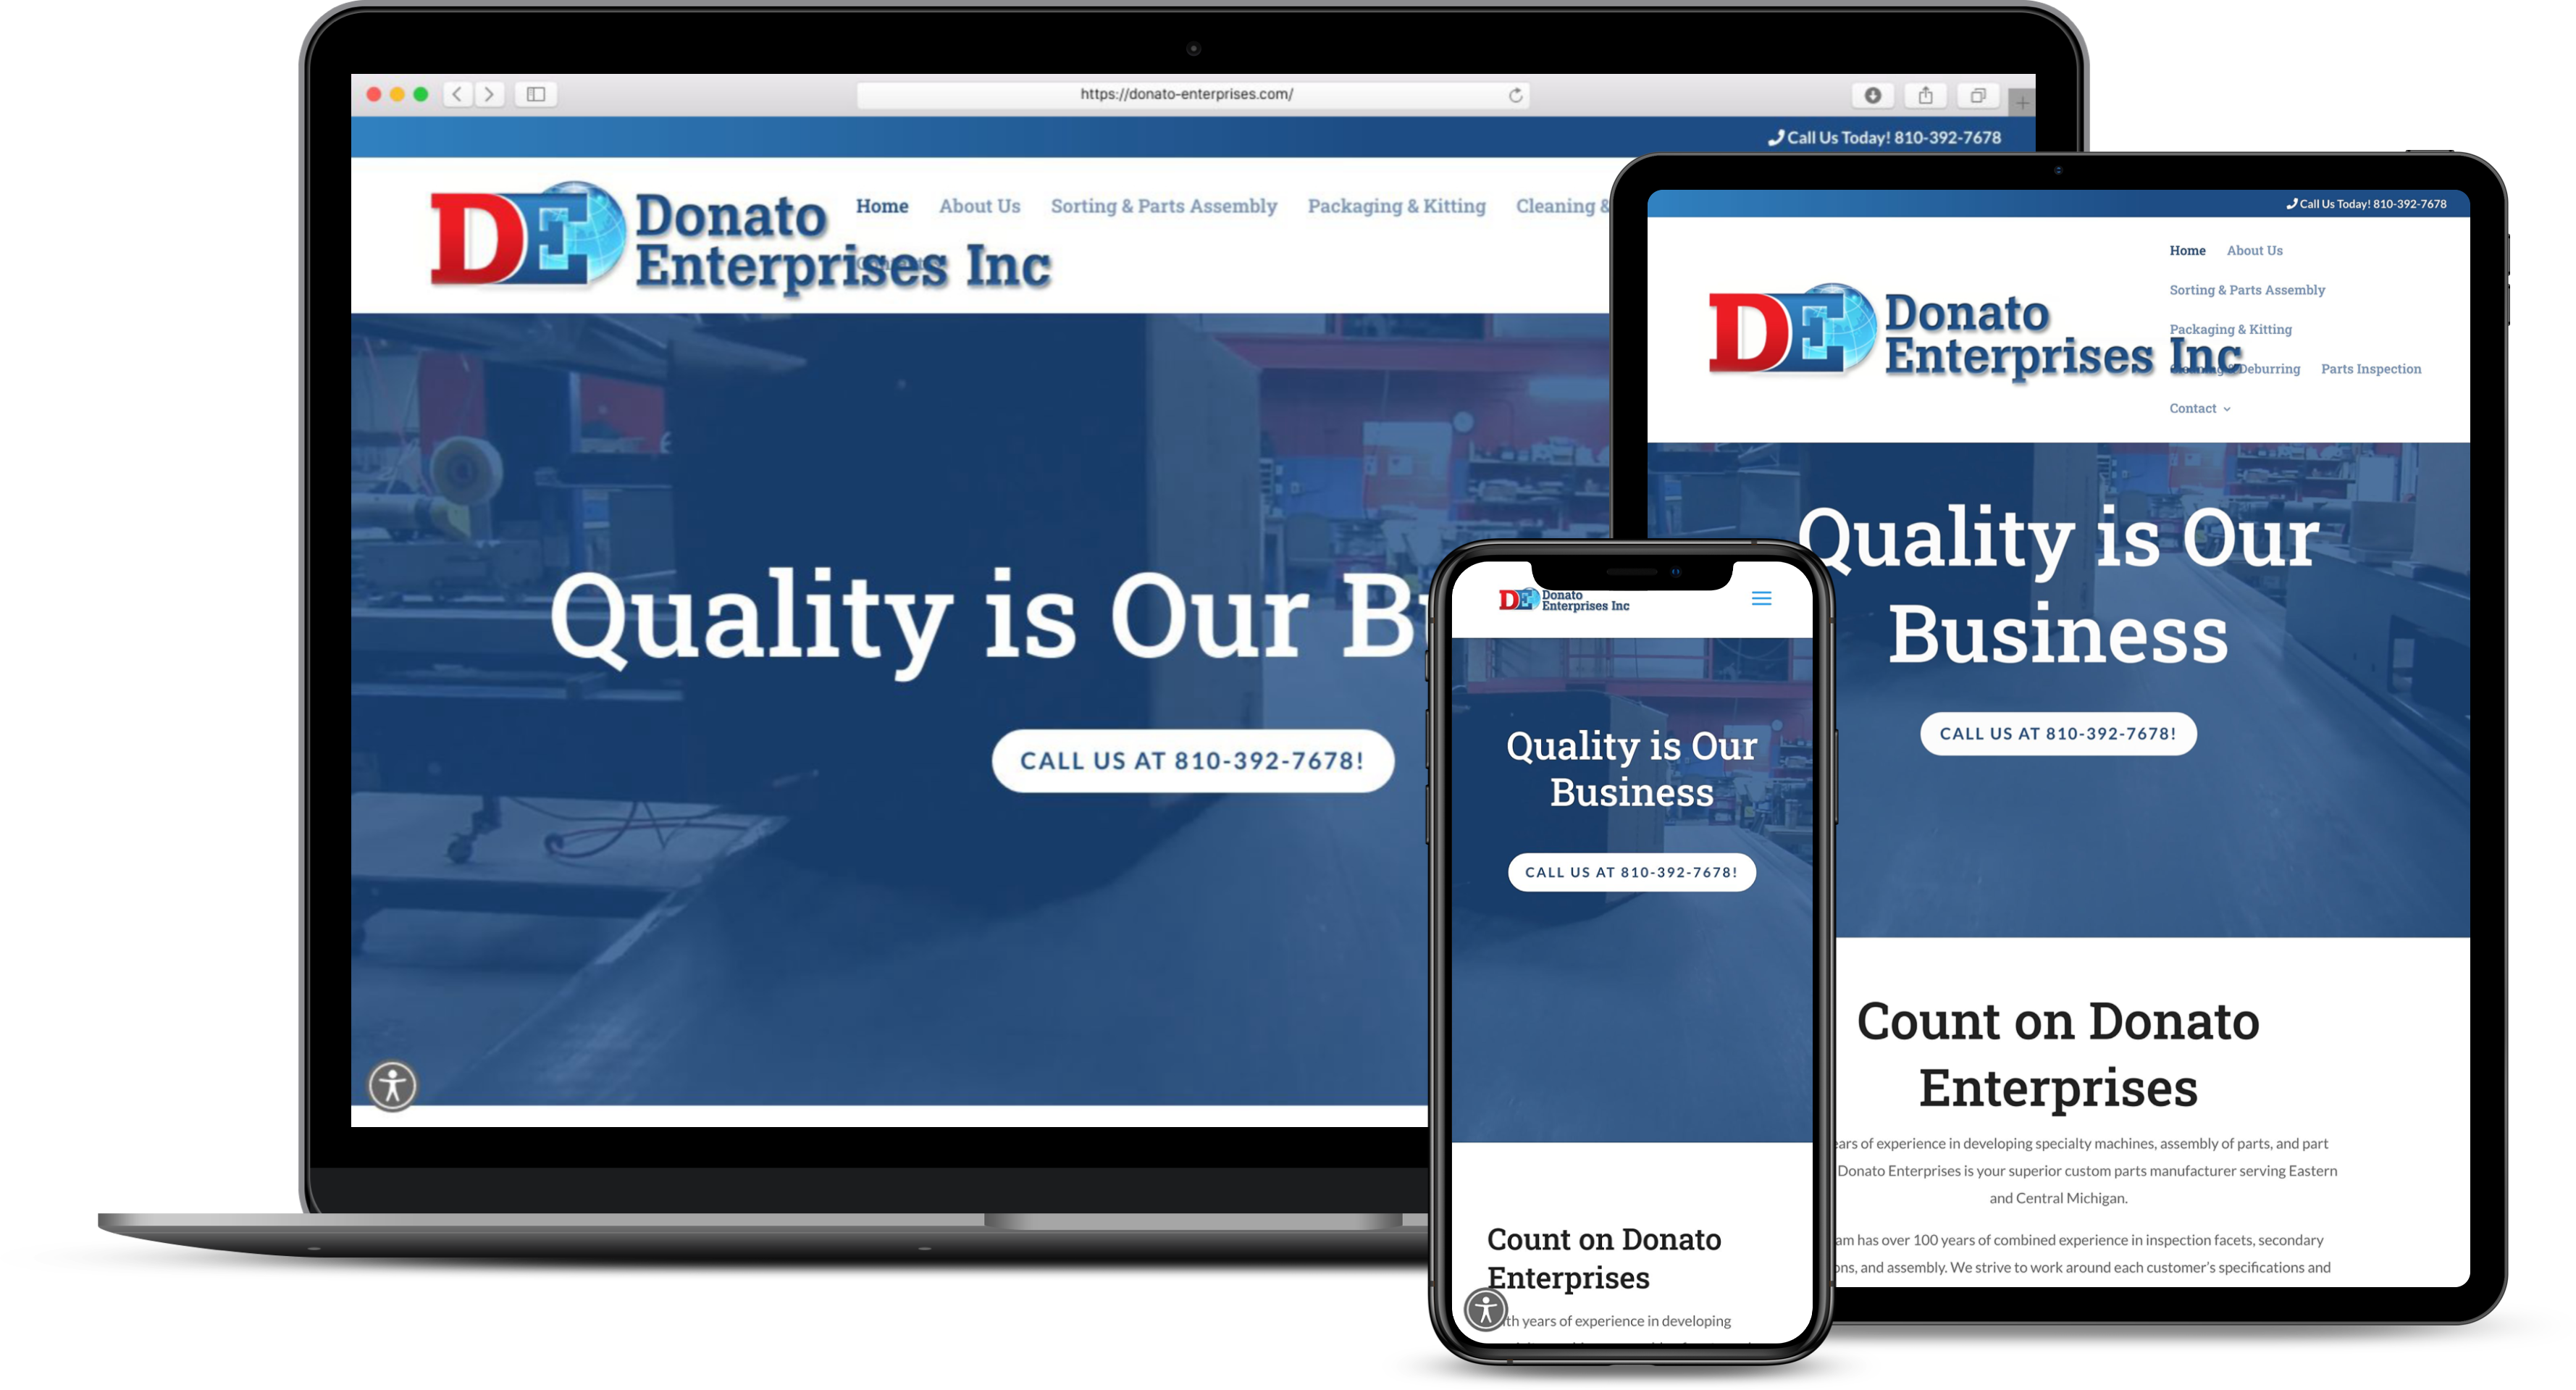 Donato Enterprises, Inc.